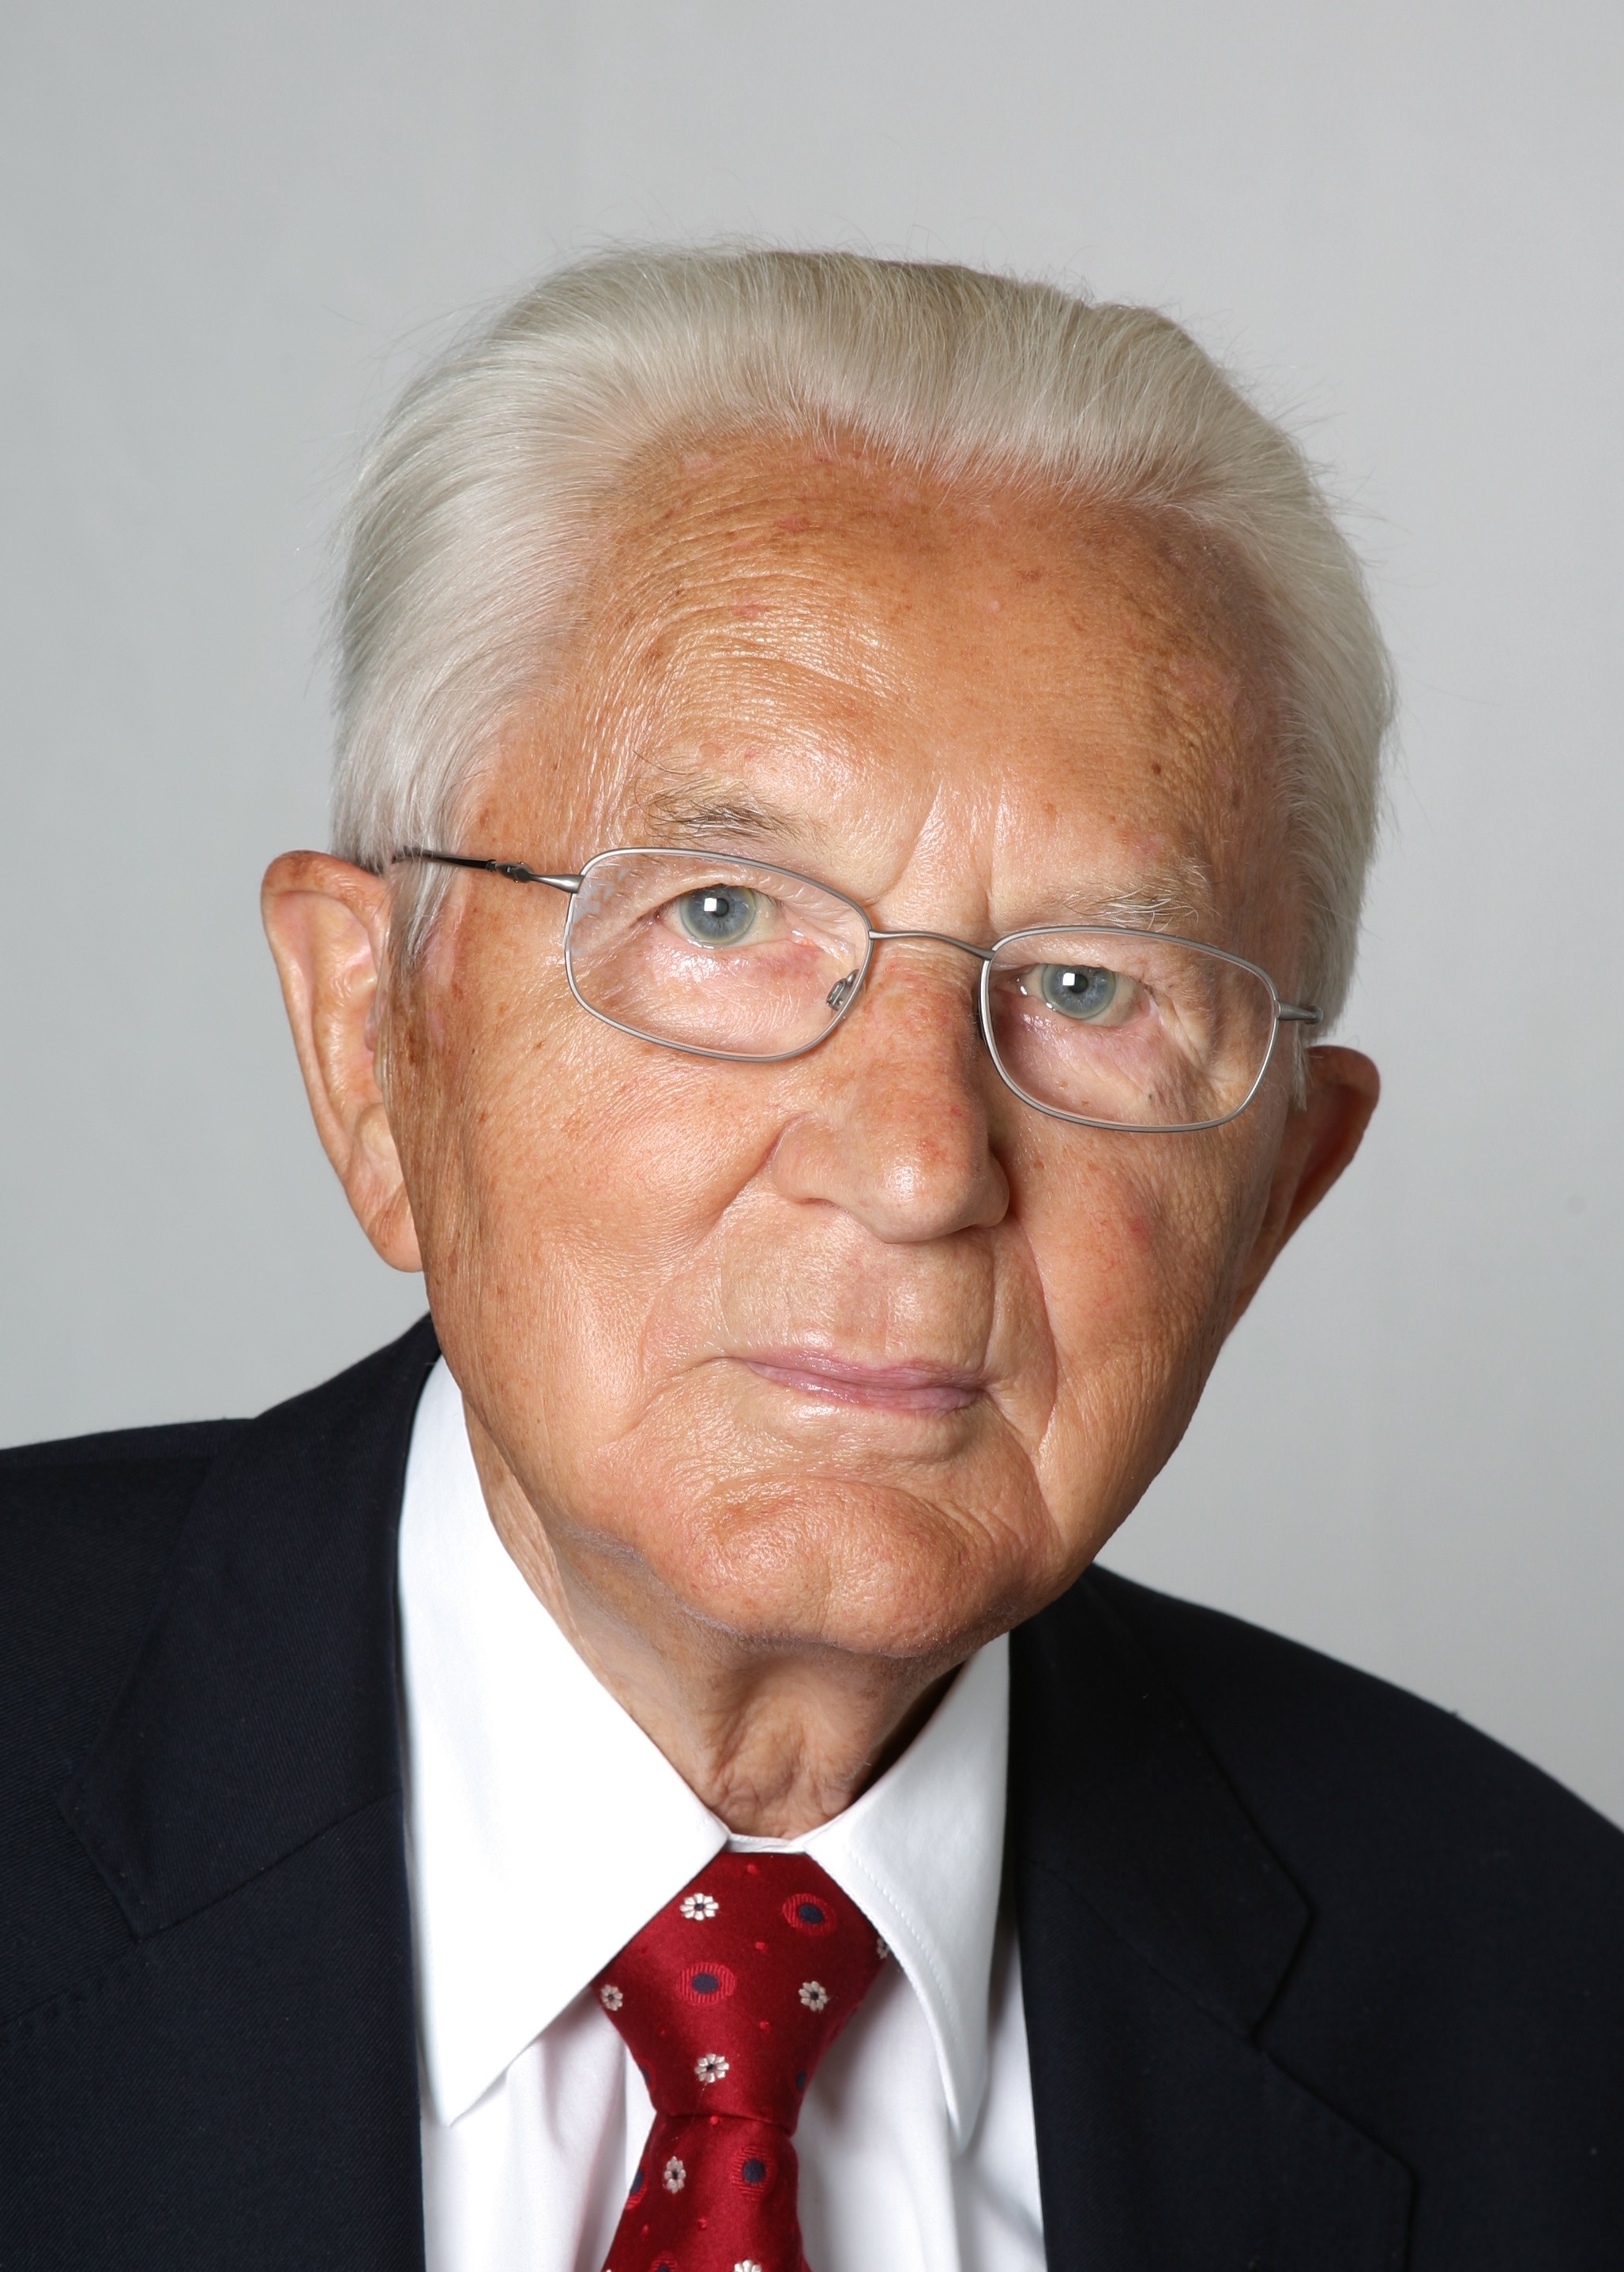 Aldi founder Karl Albrecht has passed away aged 94